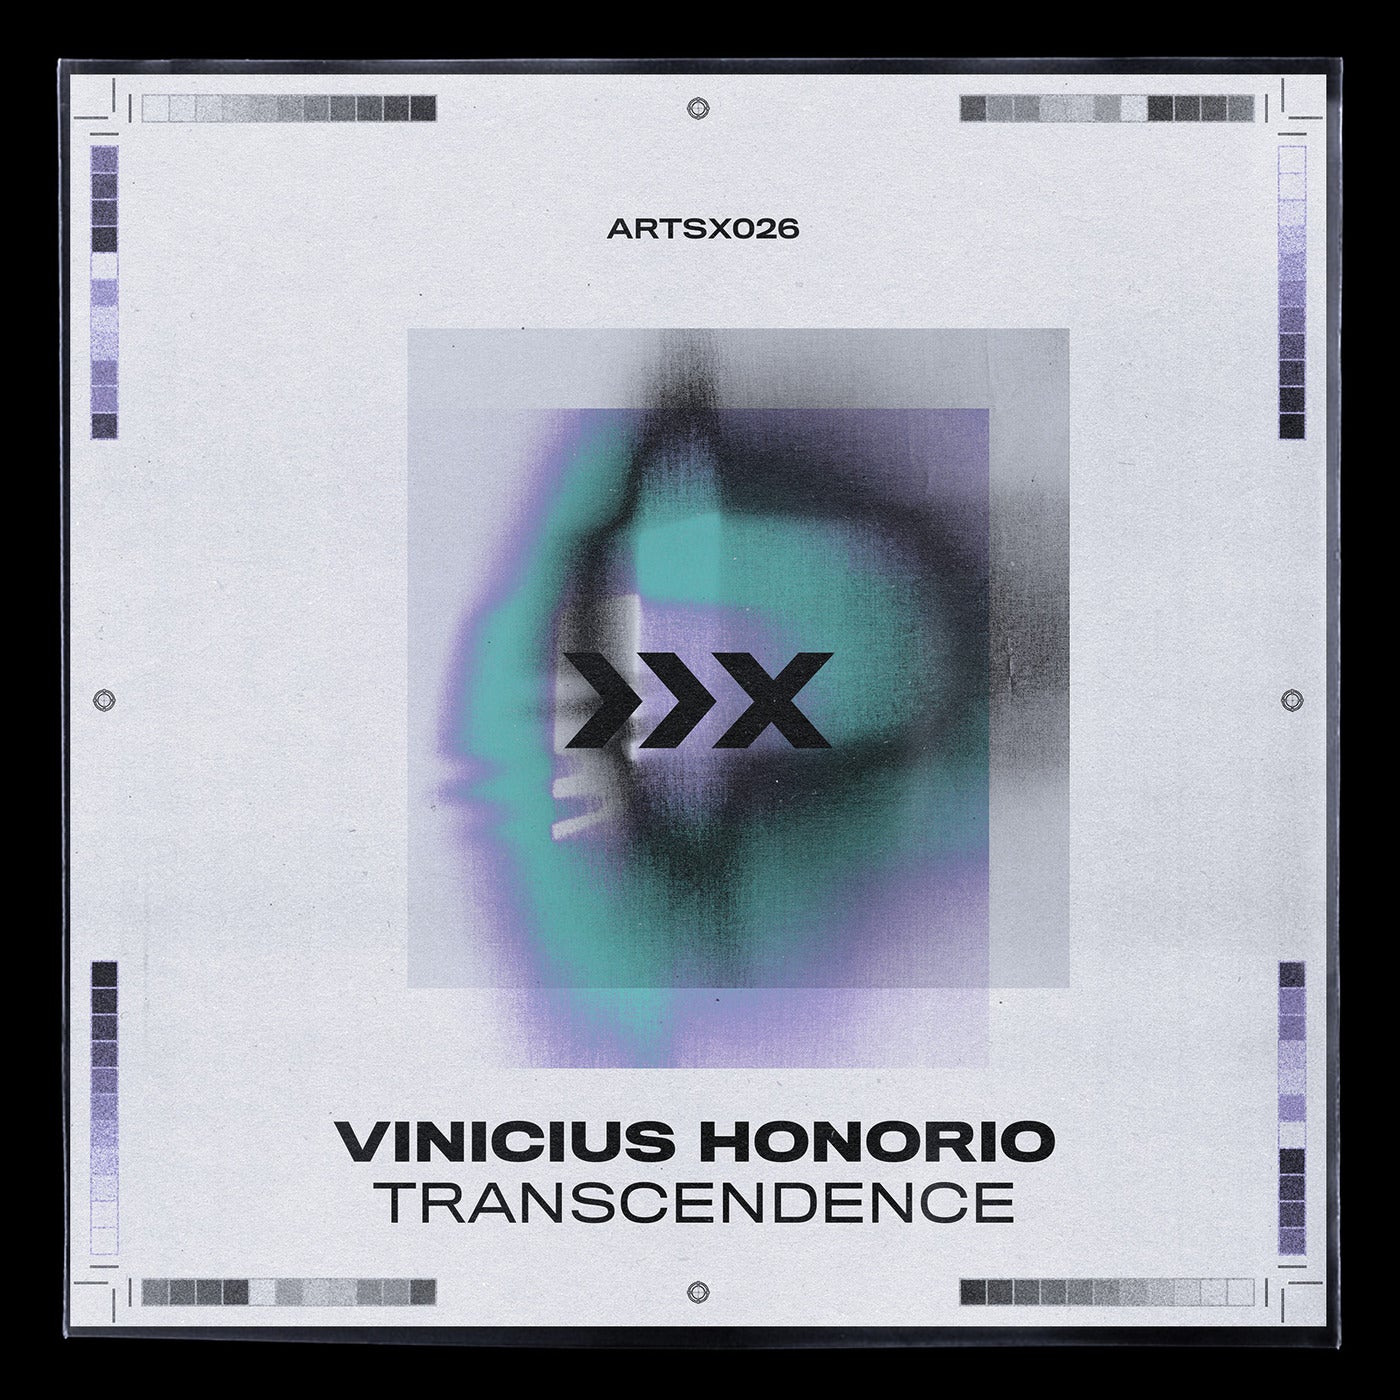 image cover: Vinicius Honorio - Transcendence / ARTSX026